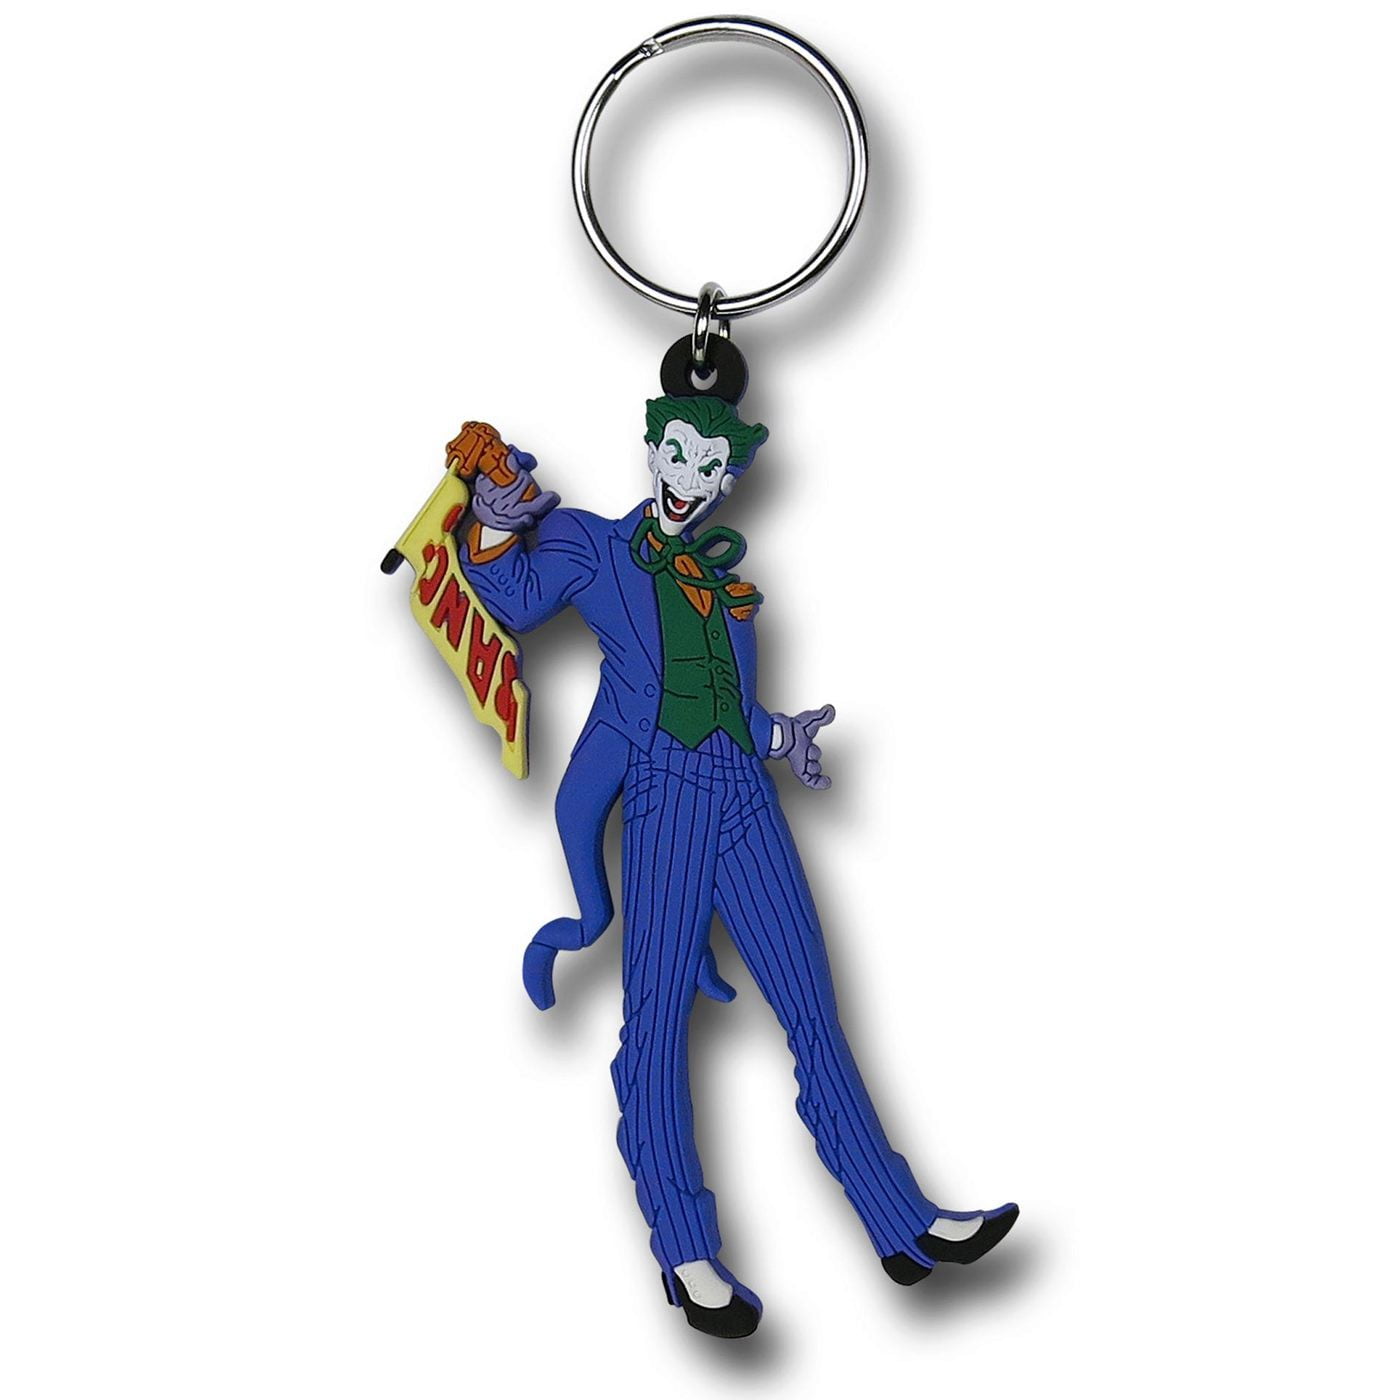 Anti-hero DC Comics Suicide Squad Harley Quinn Alloy Key Chains Keychain Keyring 